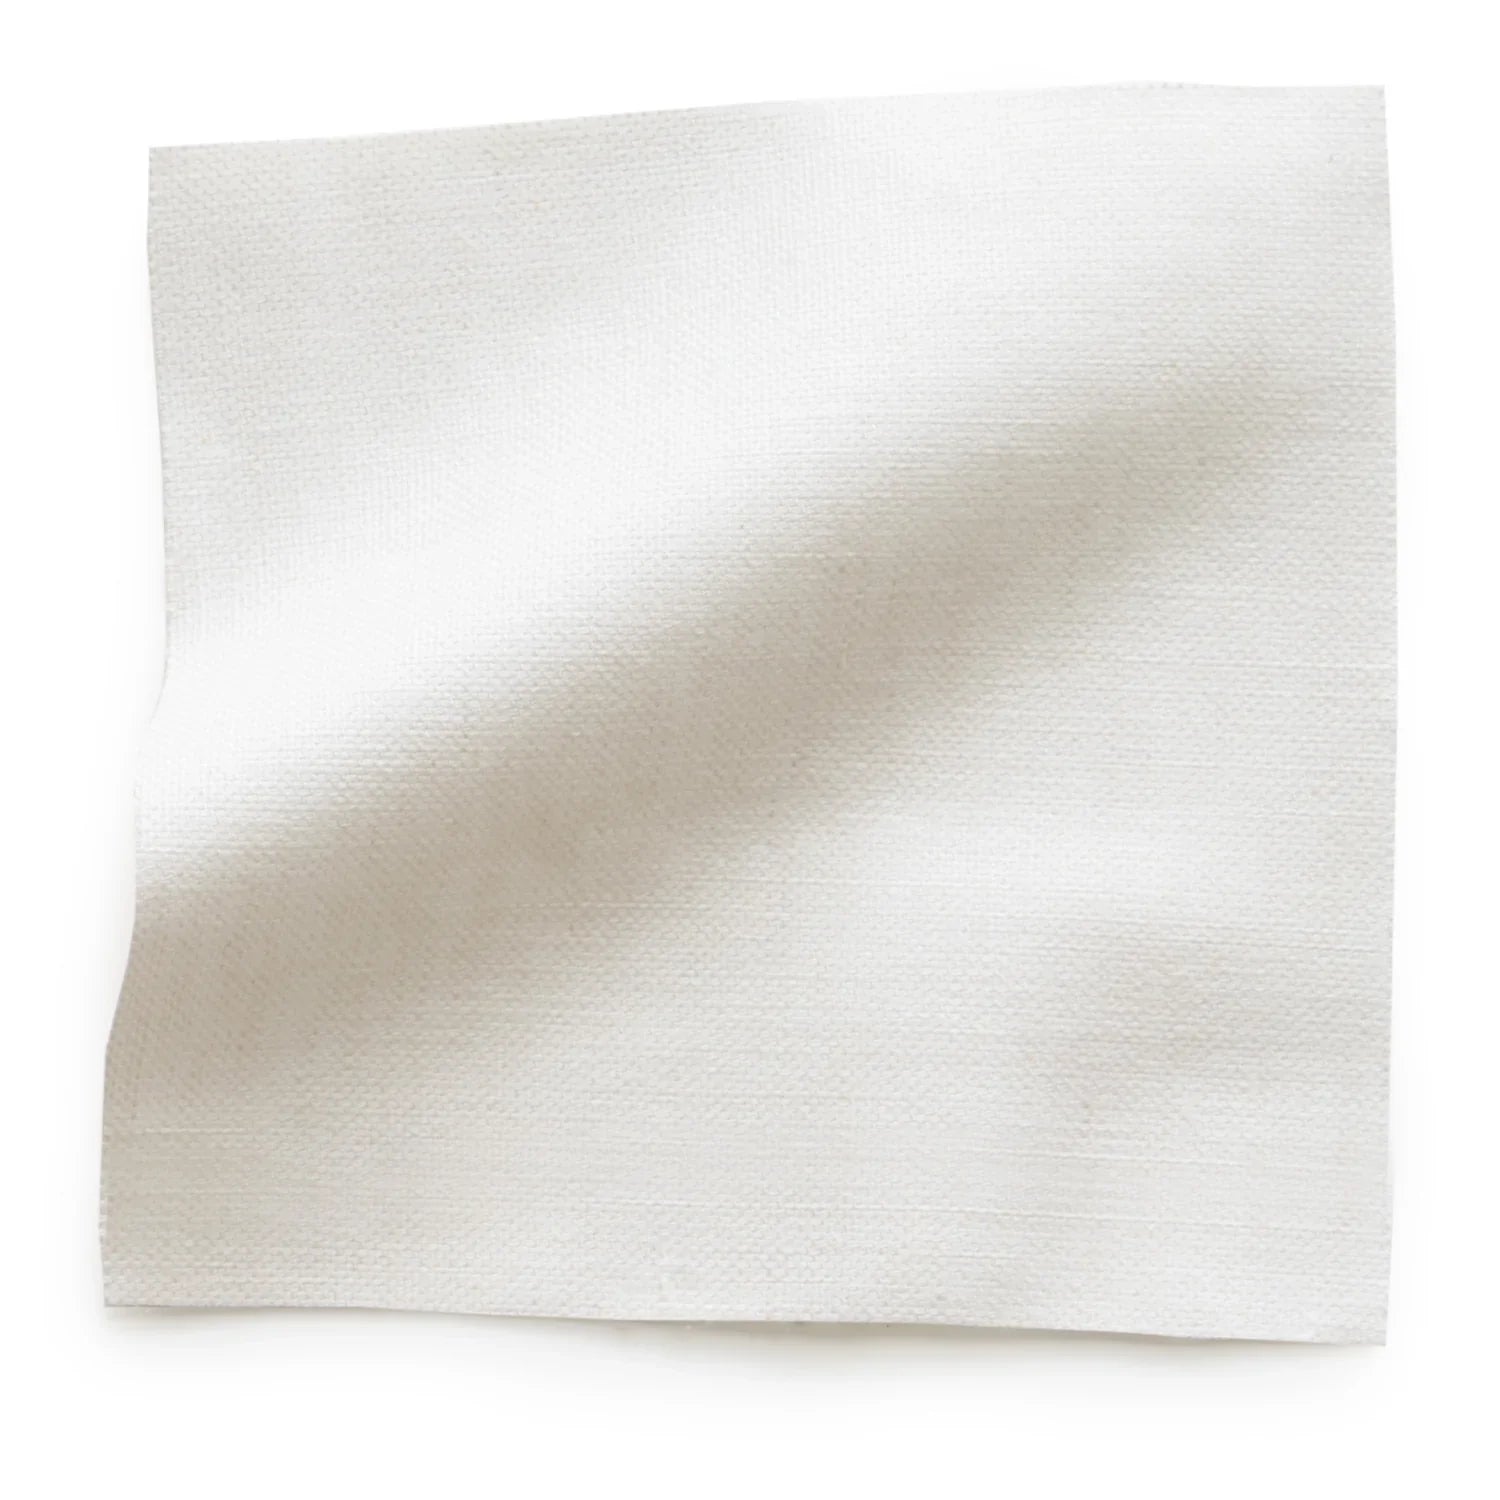 Flour Curtain - Ring Top, 75"W x 70"L, Blackout Lining, No Trim